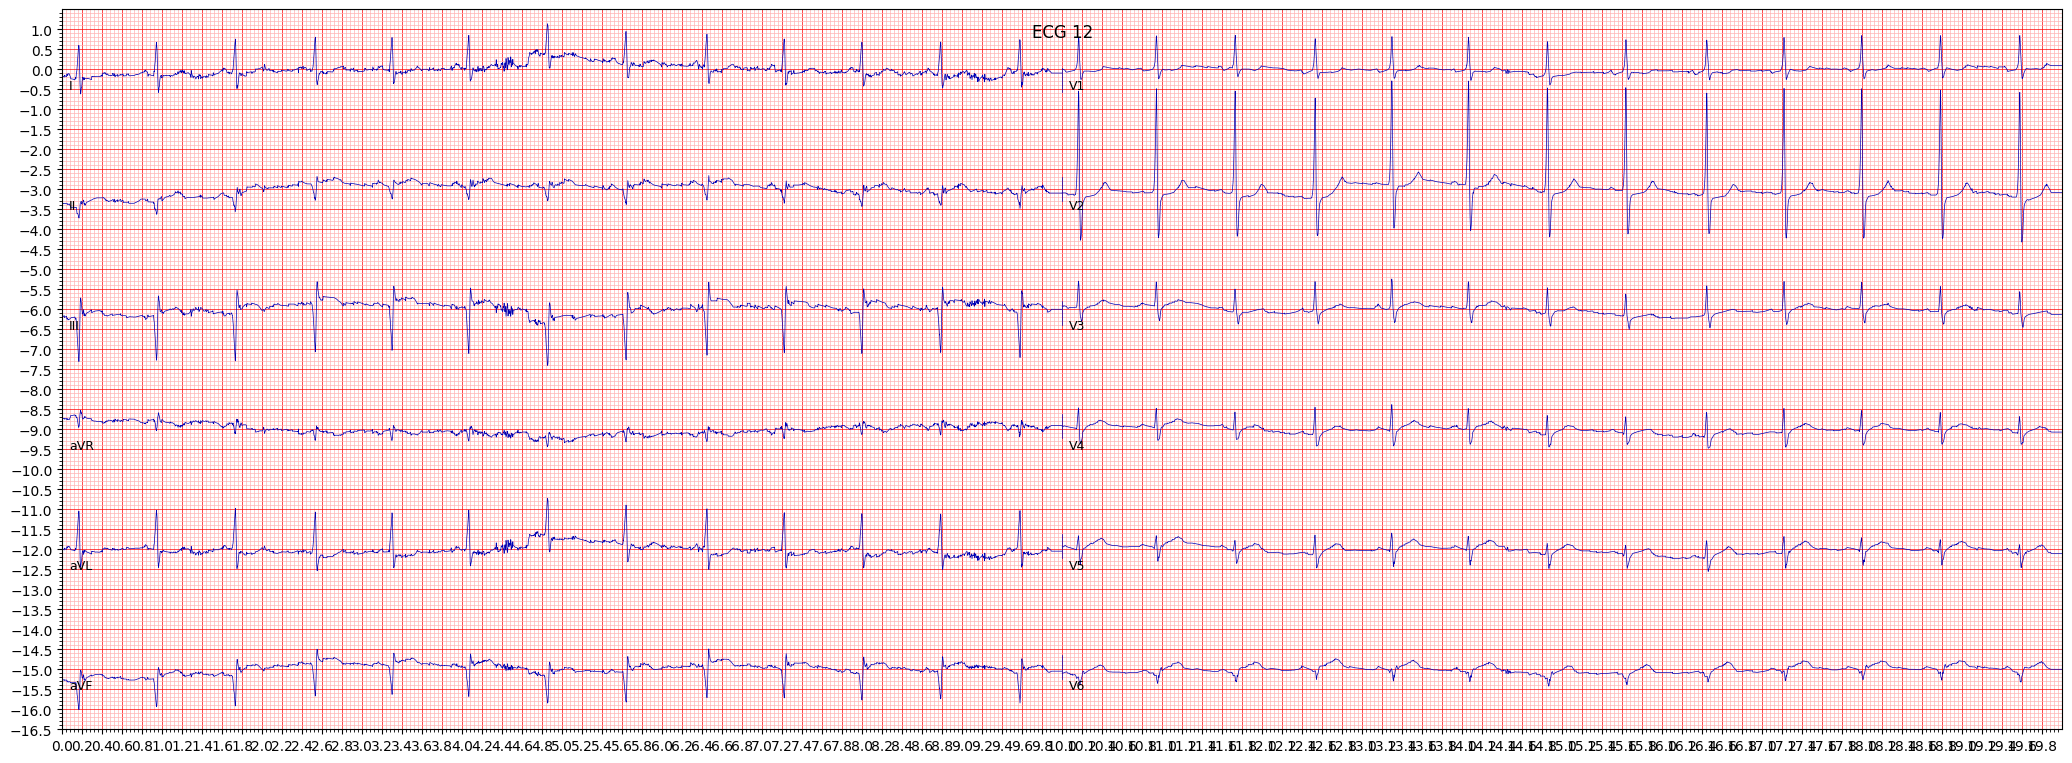 inferoposterolateral myocardial infarction (IPLMI) example 6962